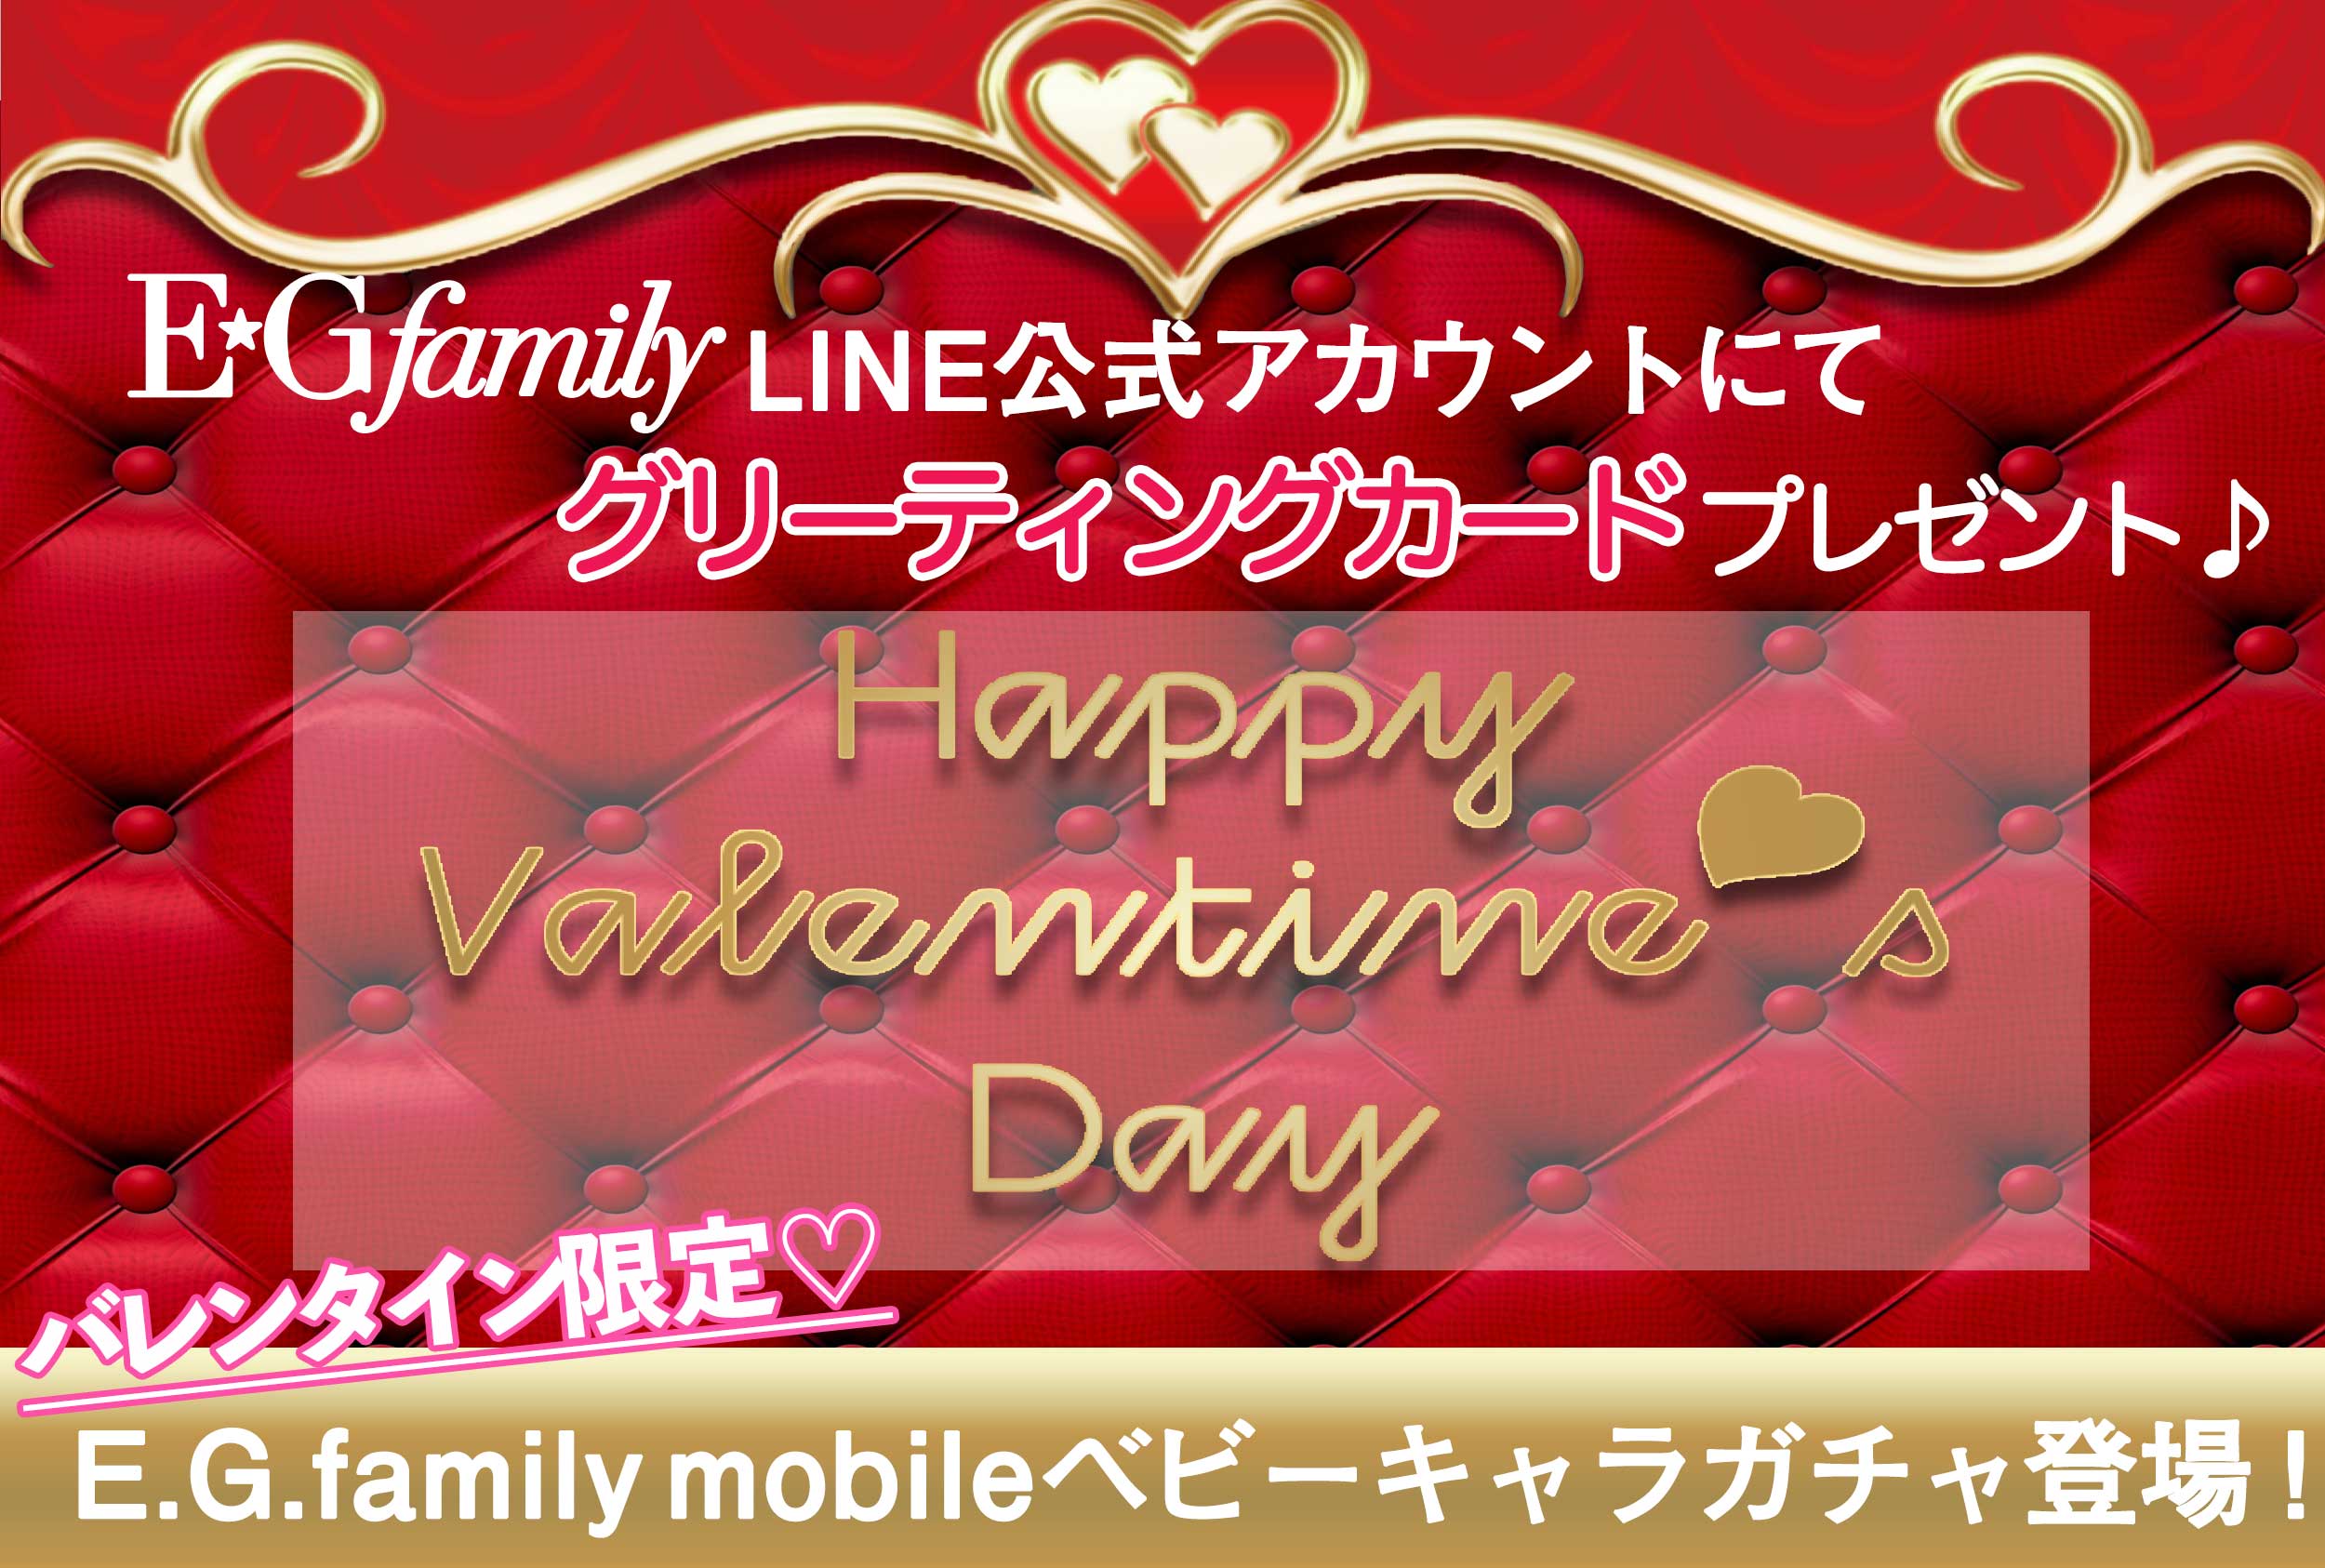 News E G Family Line公式アカウント バレンタイン限定グリーティングカード配布中 E Girls